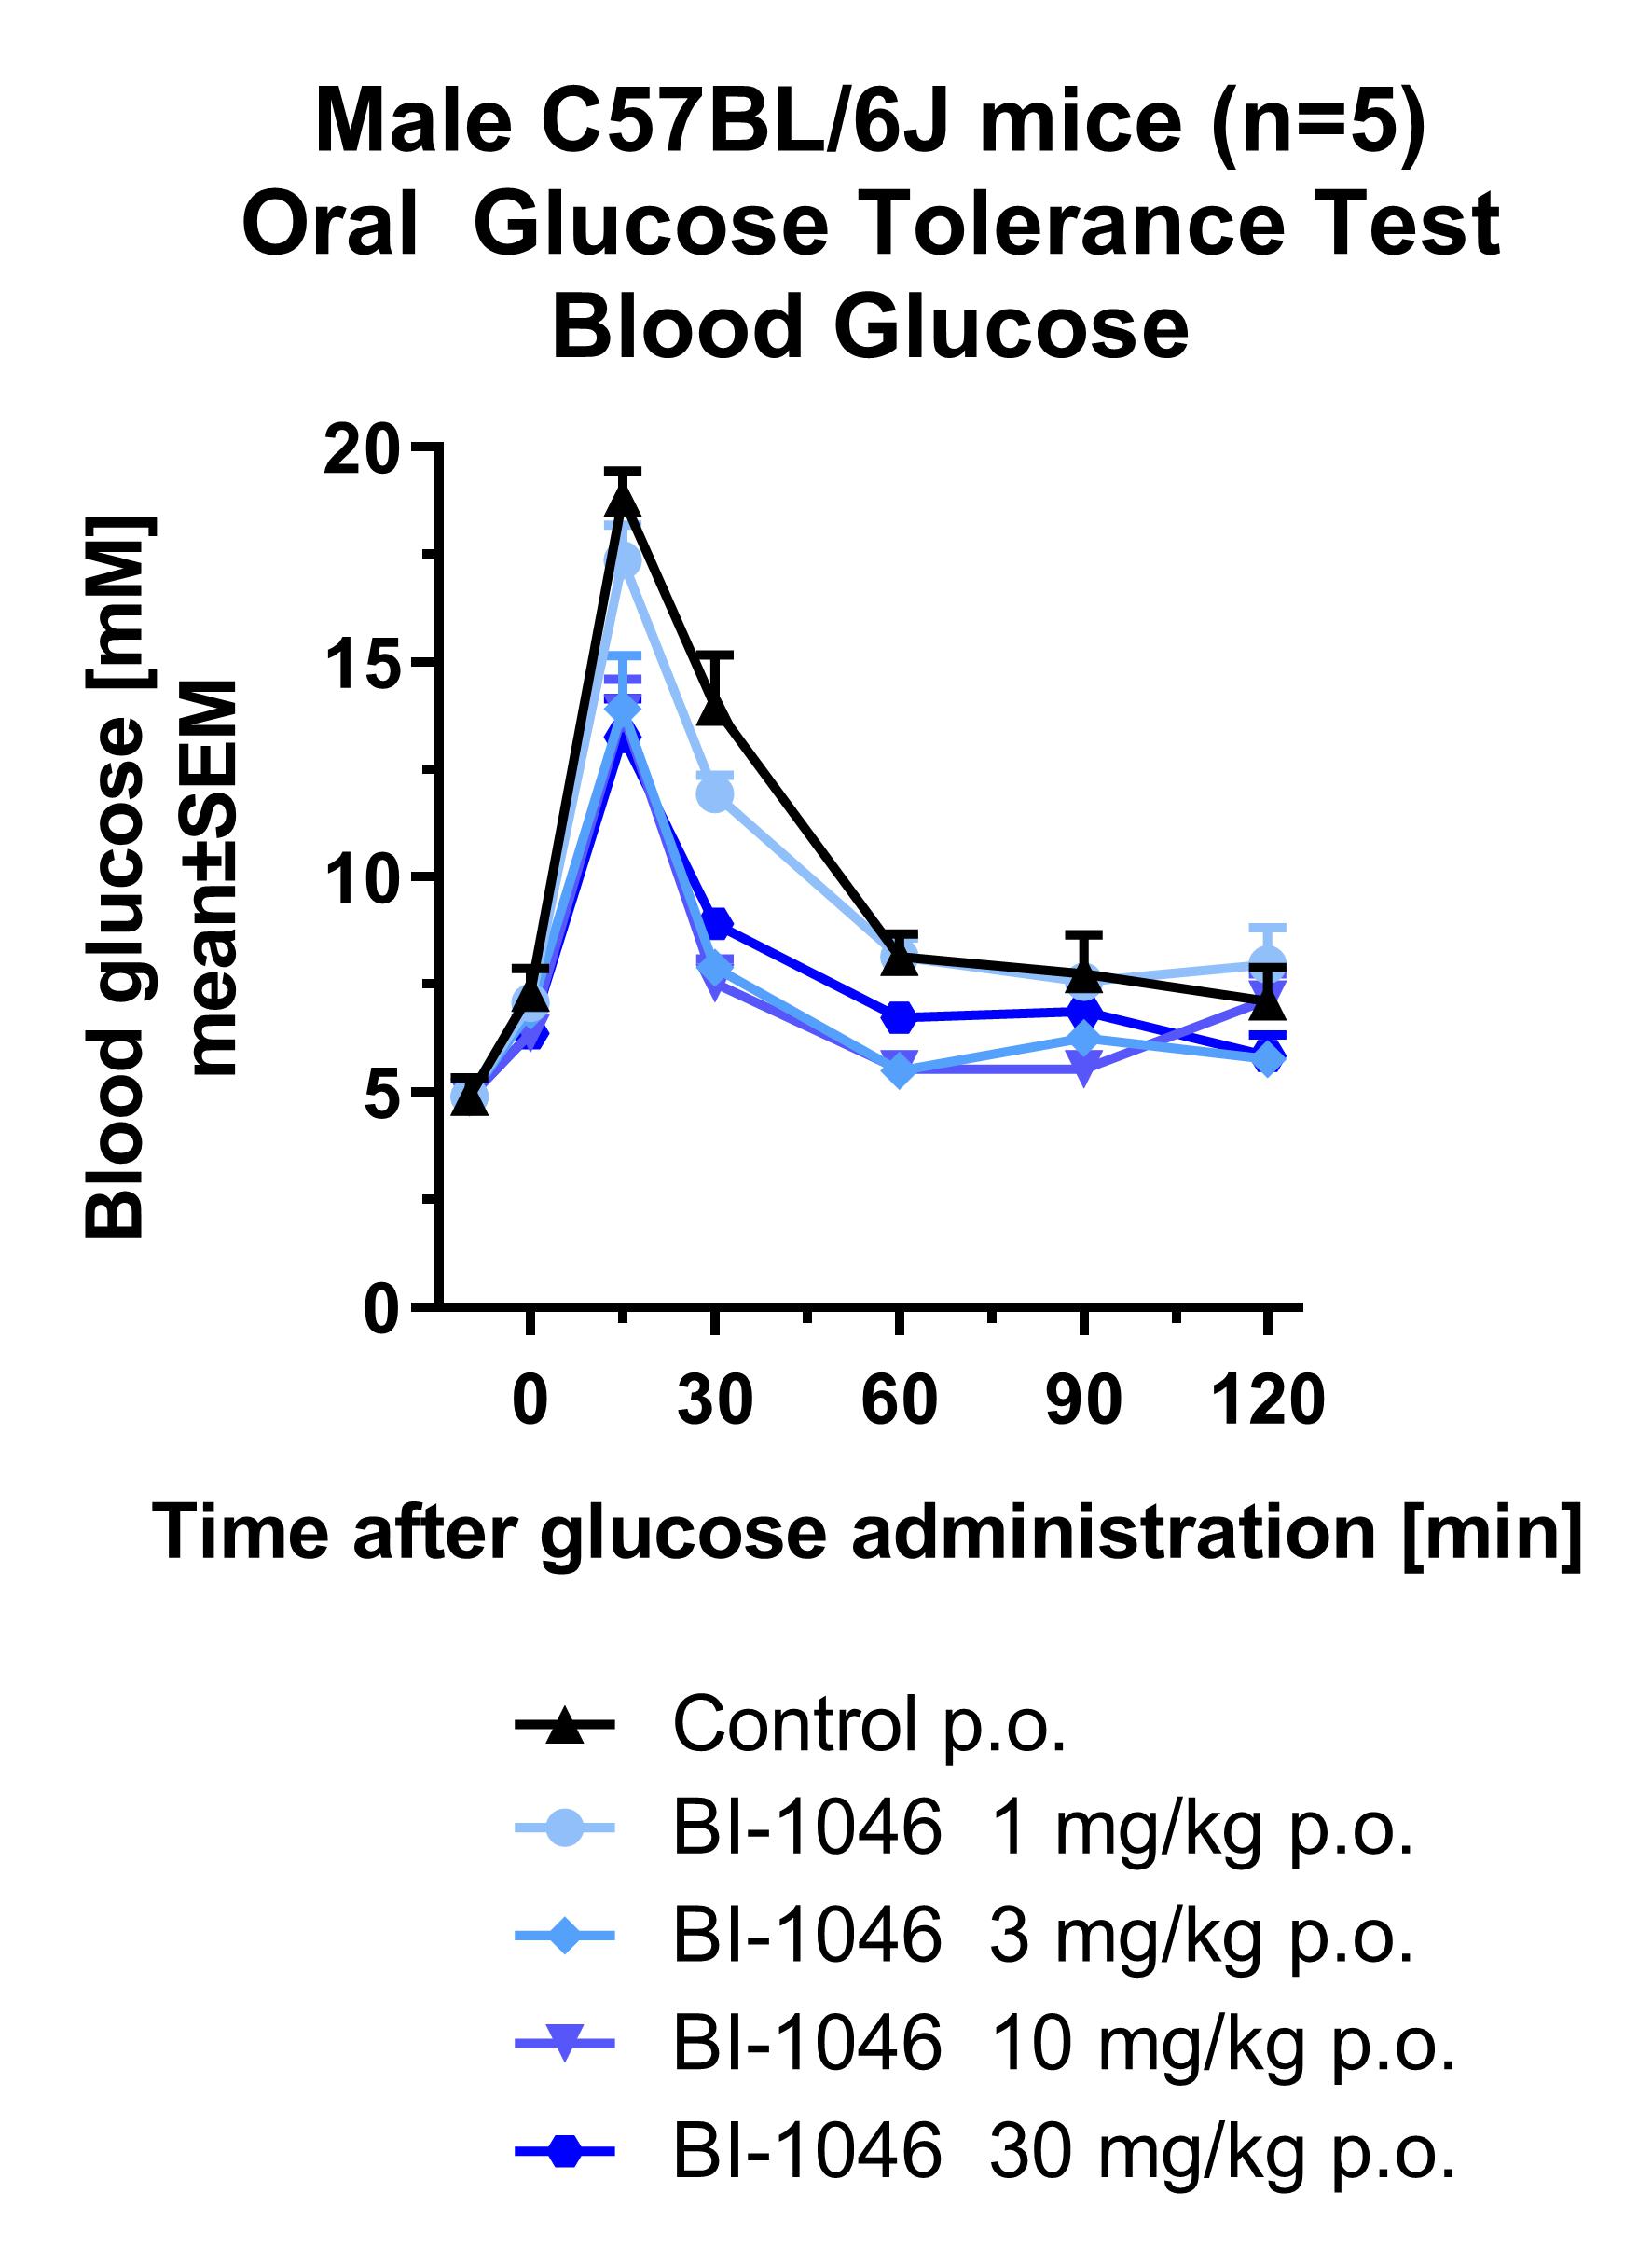 Male C57BL/6J mice (n=5) Oral Glucose Tolerance Test